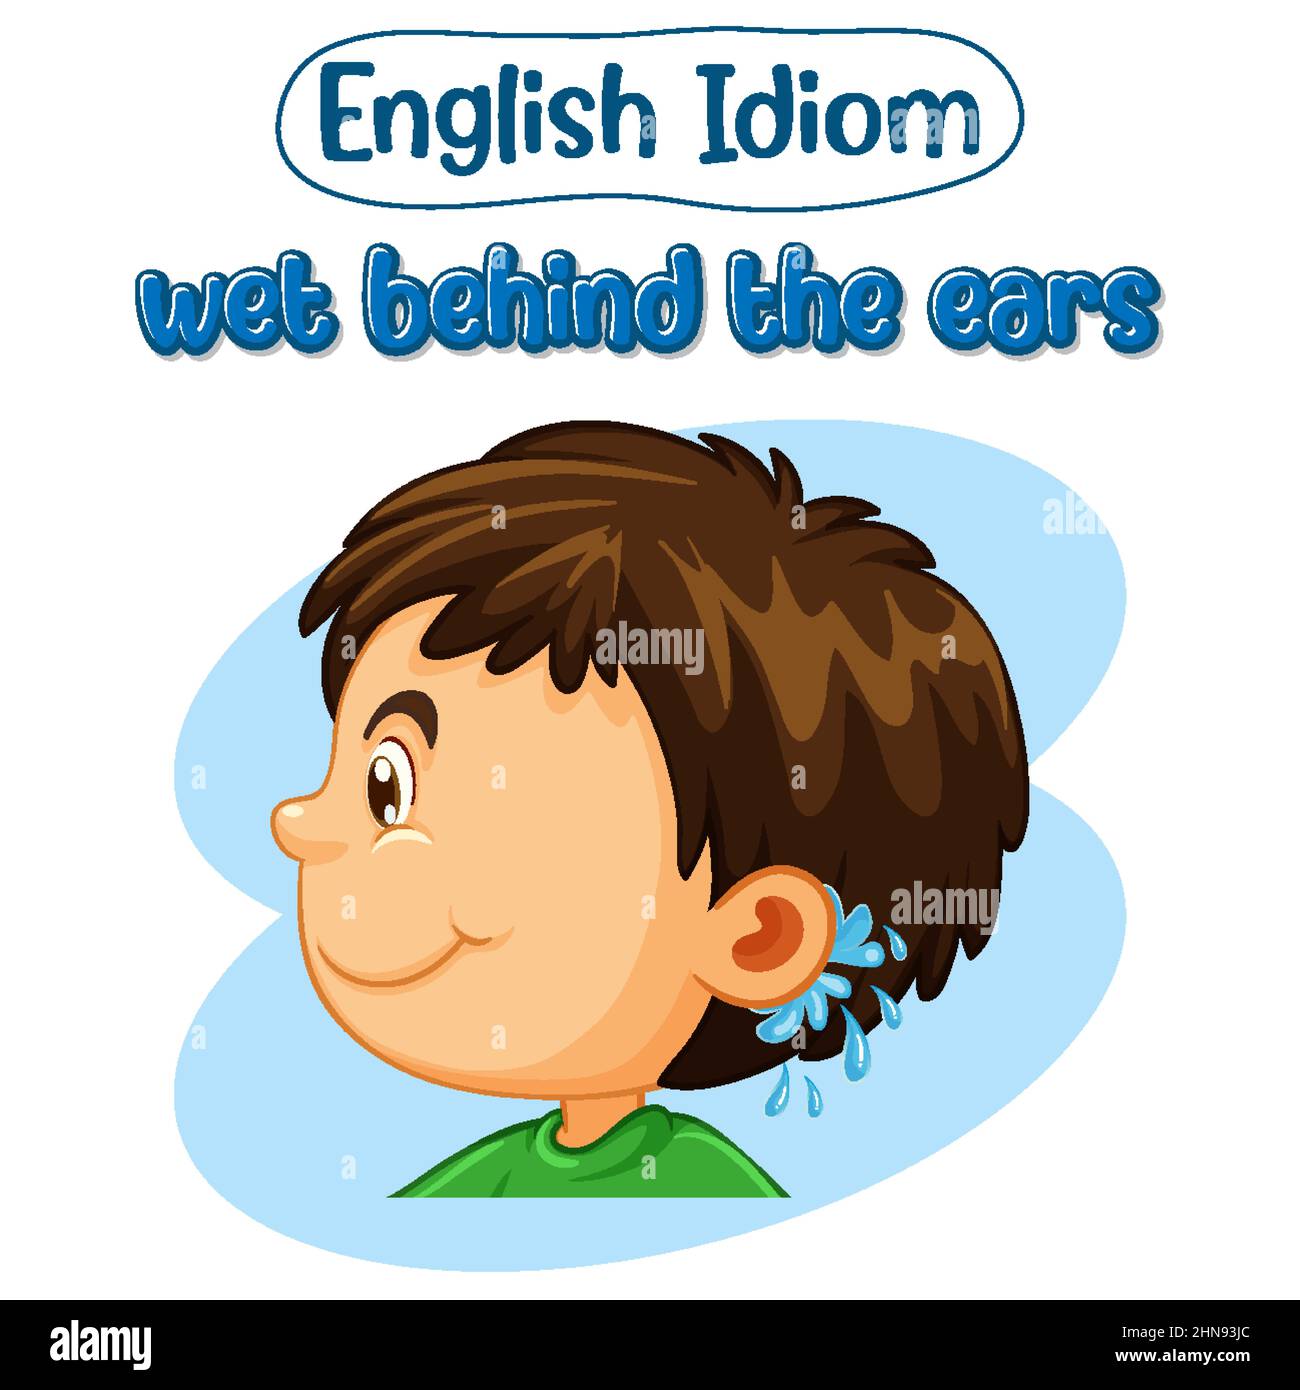 O que significa a expressão PLAY IT BY EAR em inglês?